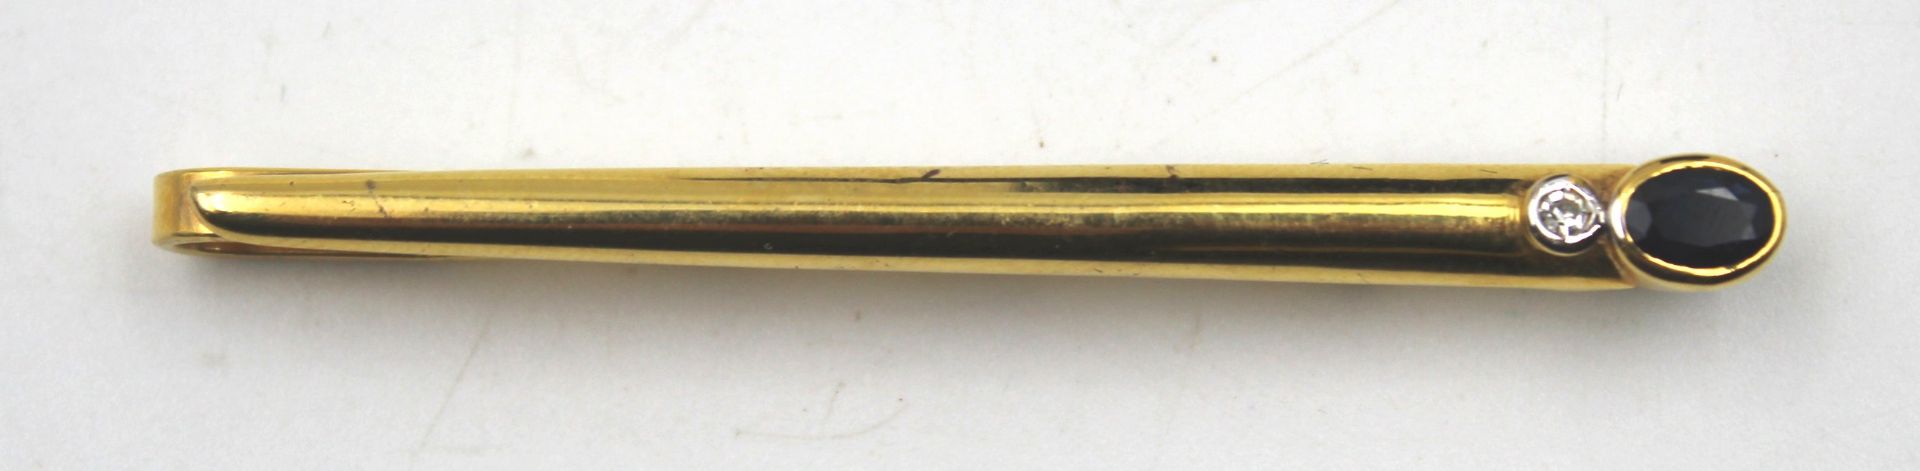 Kravattennadel, GG 333, Brillant und Safir, Klammer Metall, L-6cm.